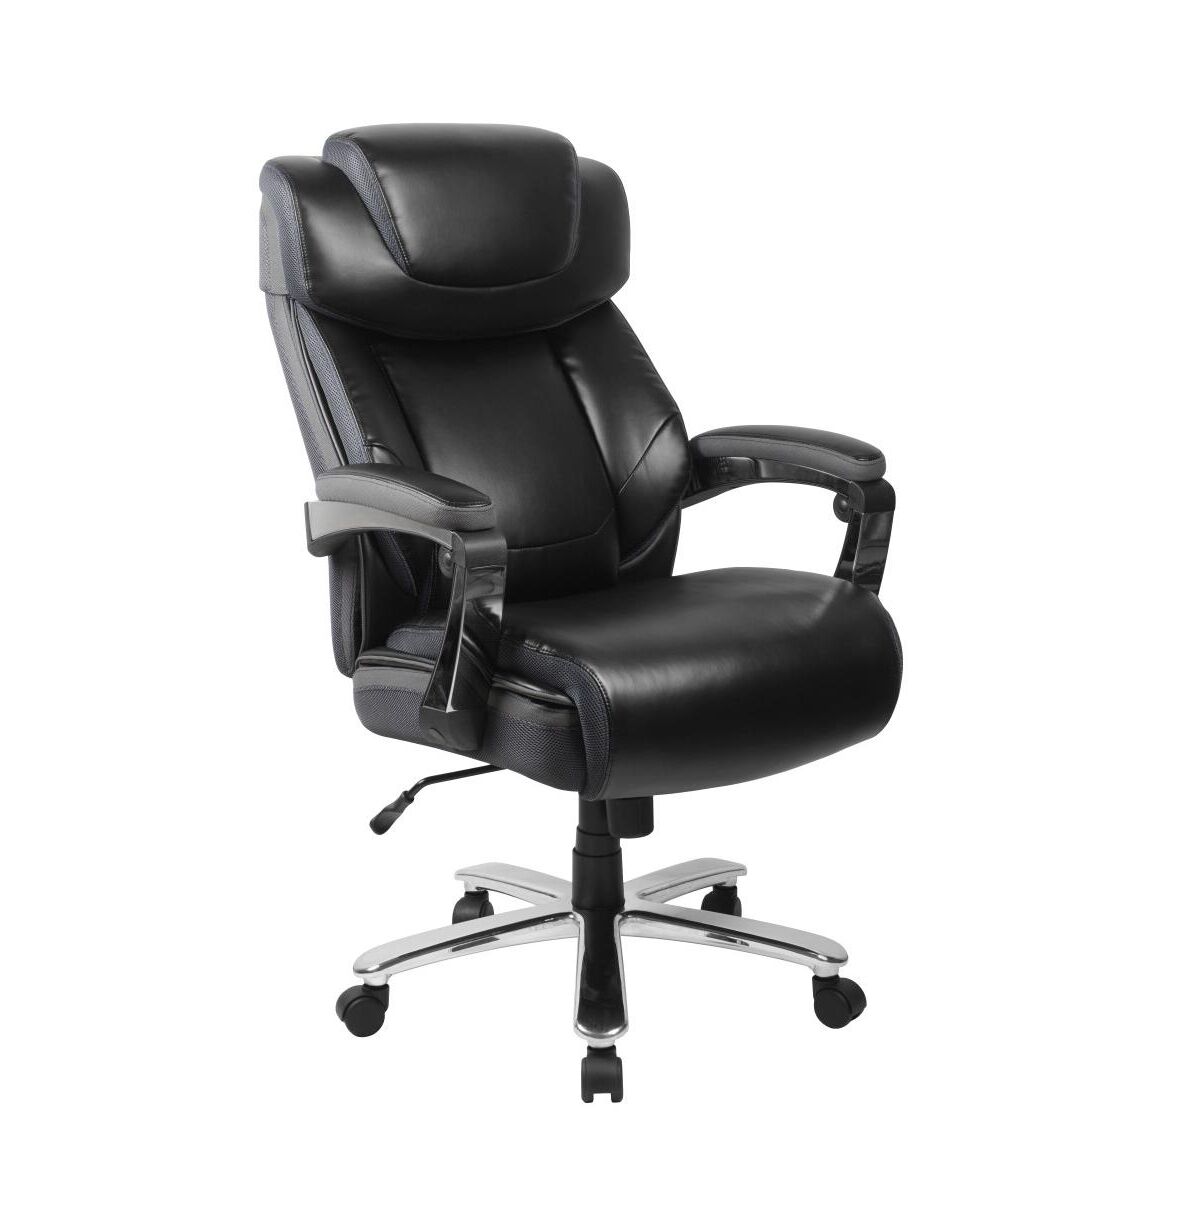 Emma+oliver 500 Lb. Big & Tall Height Adjustable Headrest Swivel Ergonomic Office Chair - Black